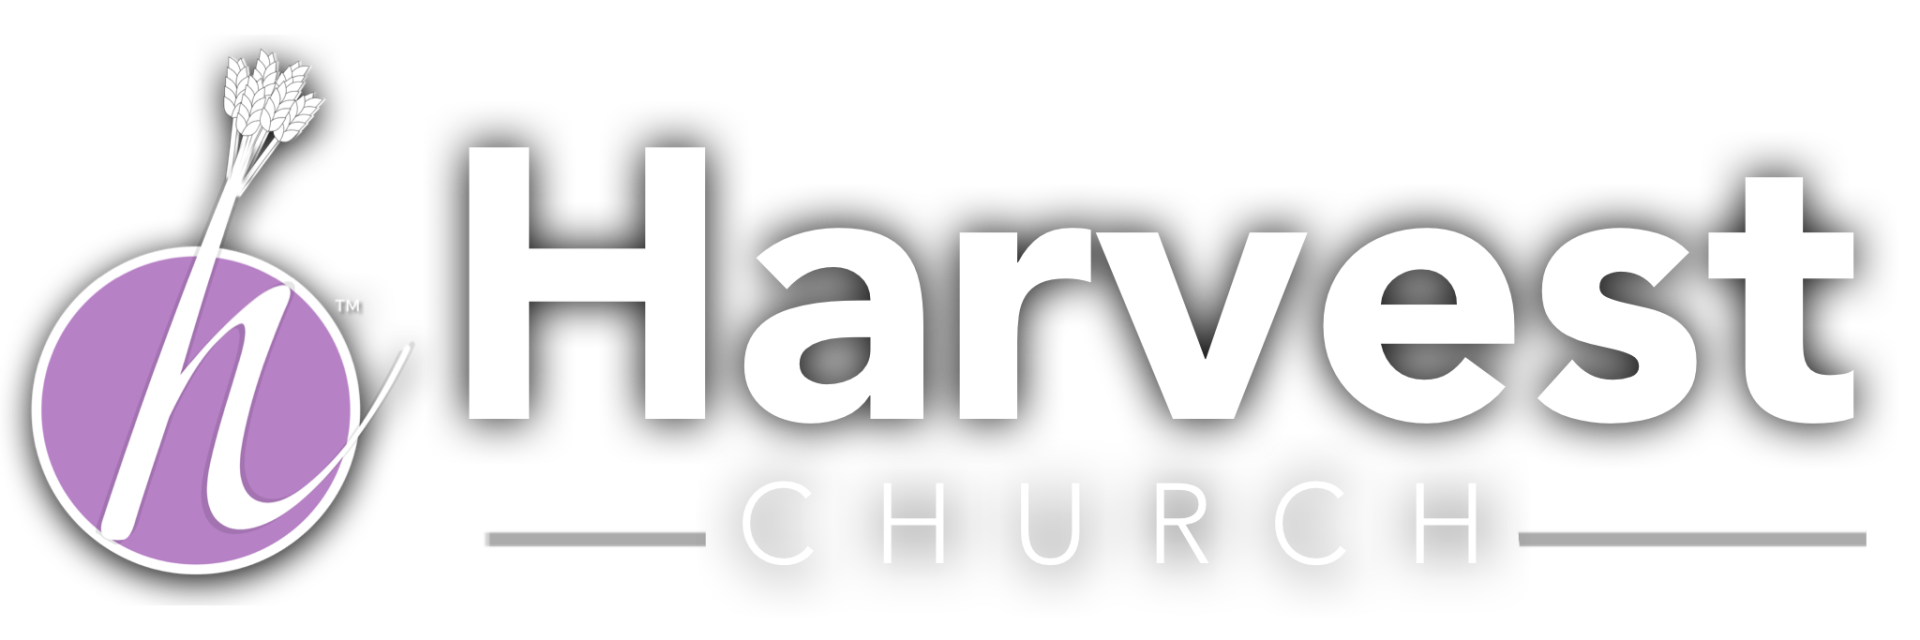 Harvest Church - Online Home